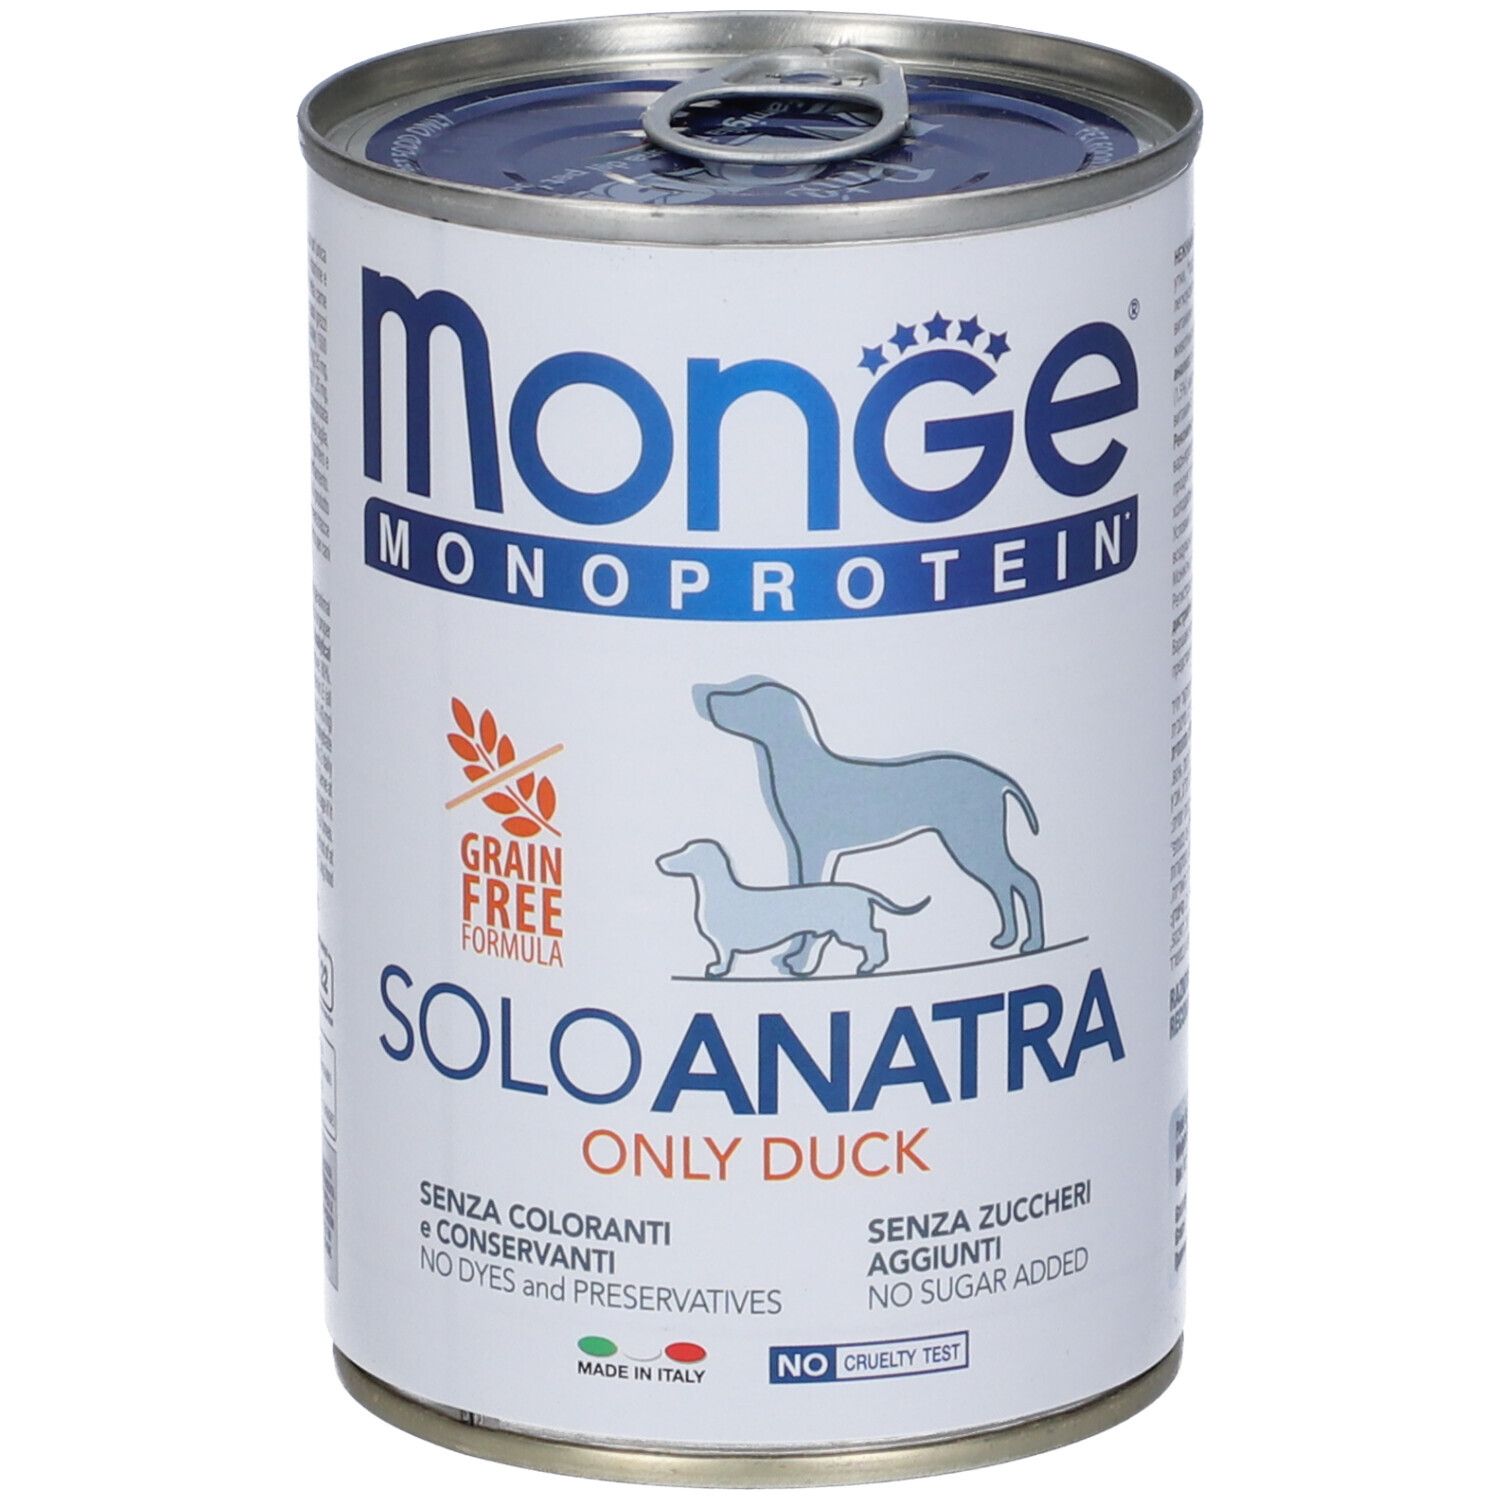 Image of Monge Monoprotein Solo Anatra